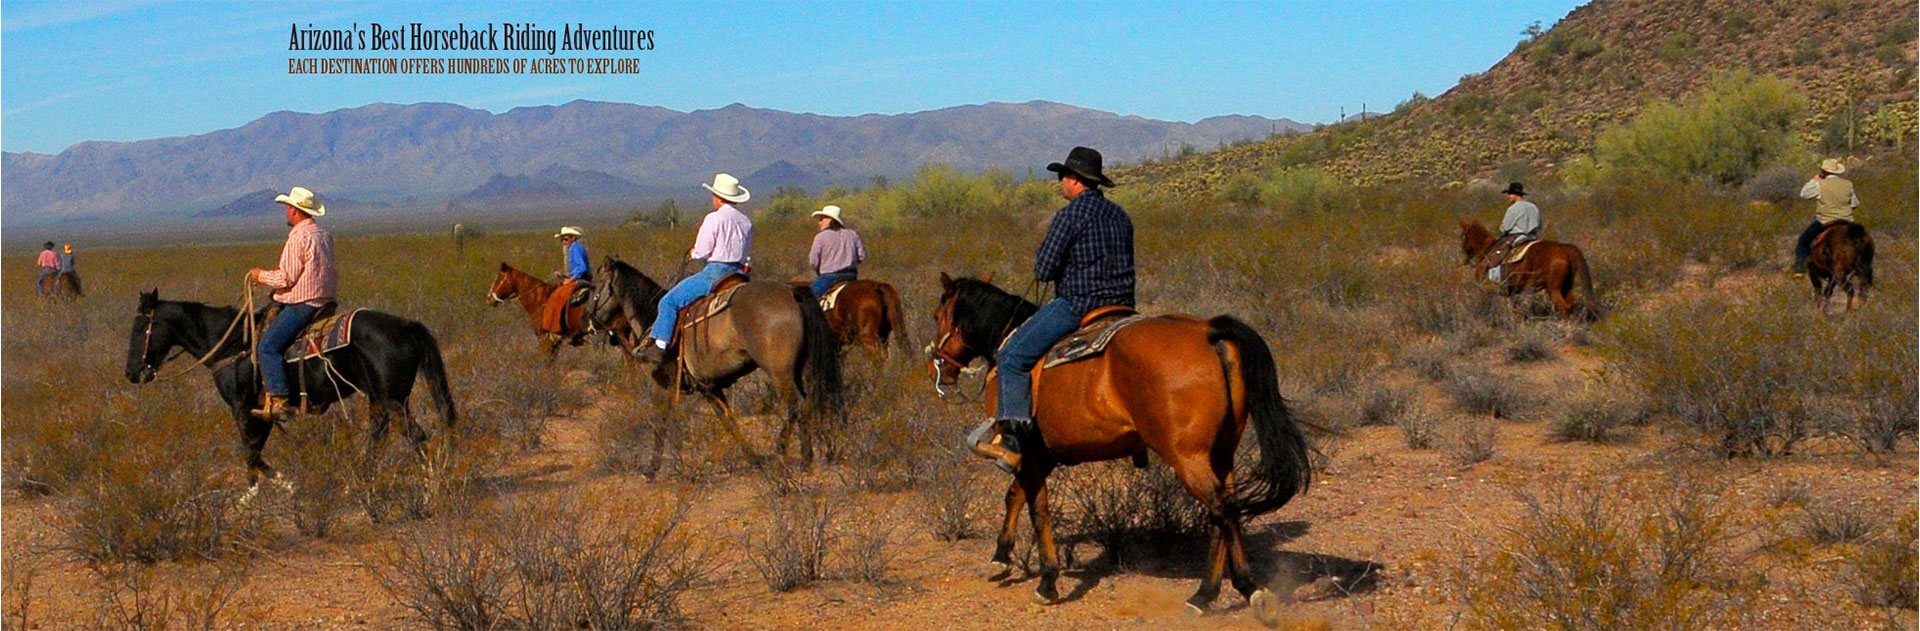 Arizona's Best Horseback Riding Adventures